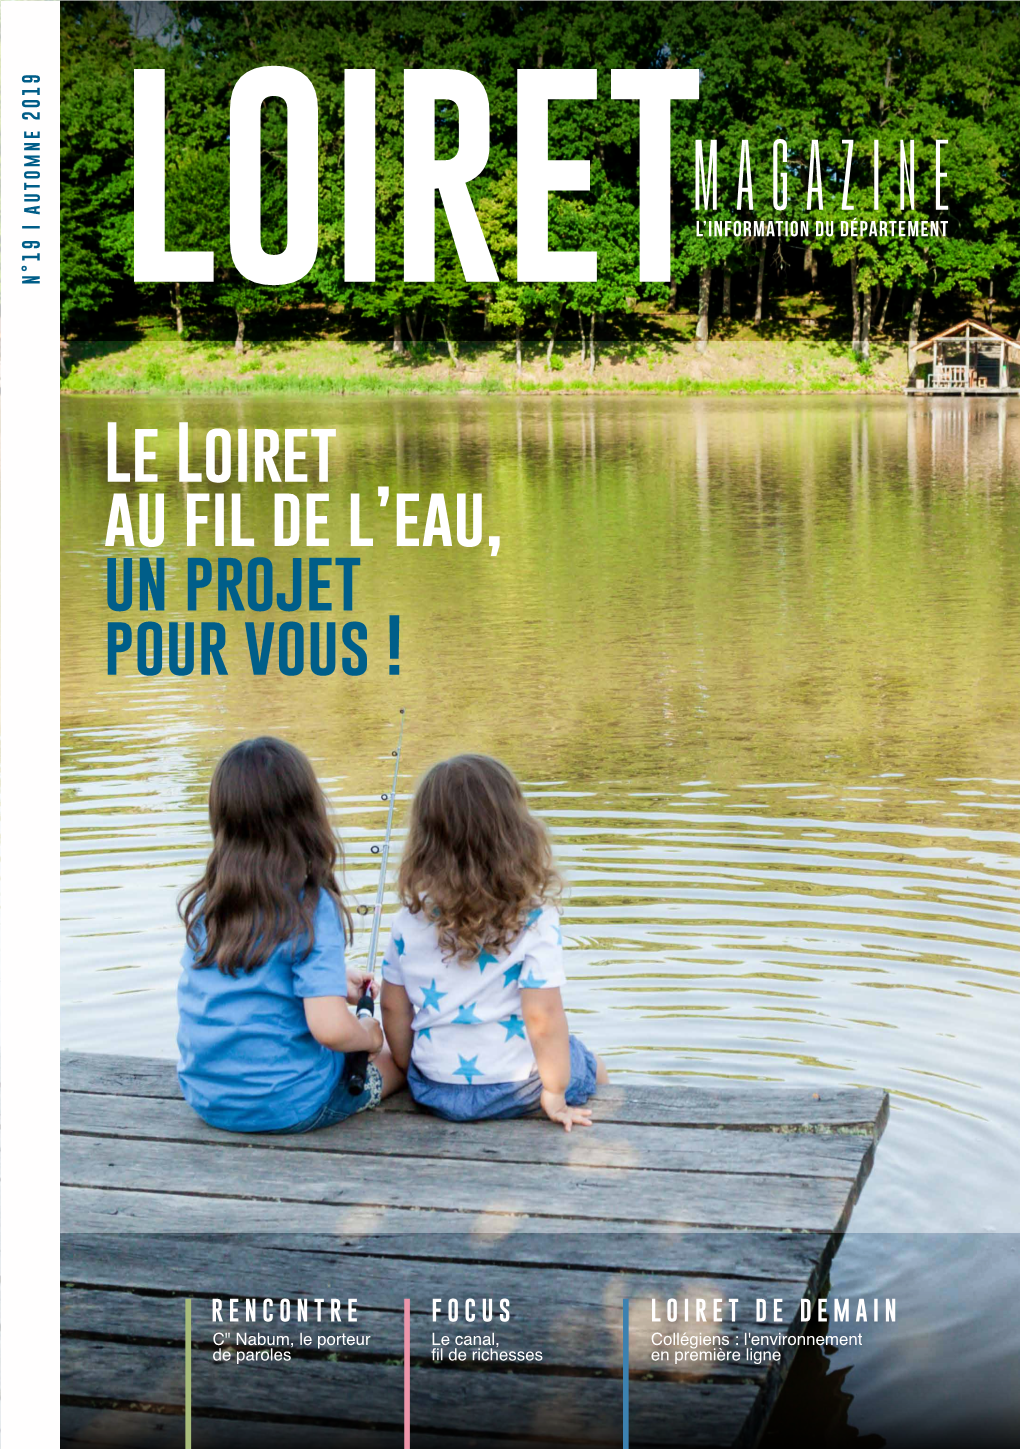 Loiretmagazine